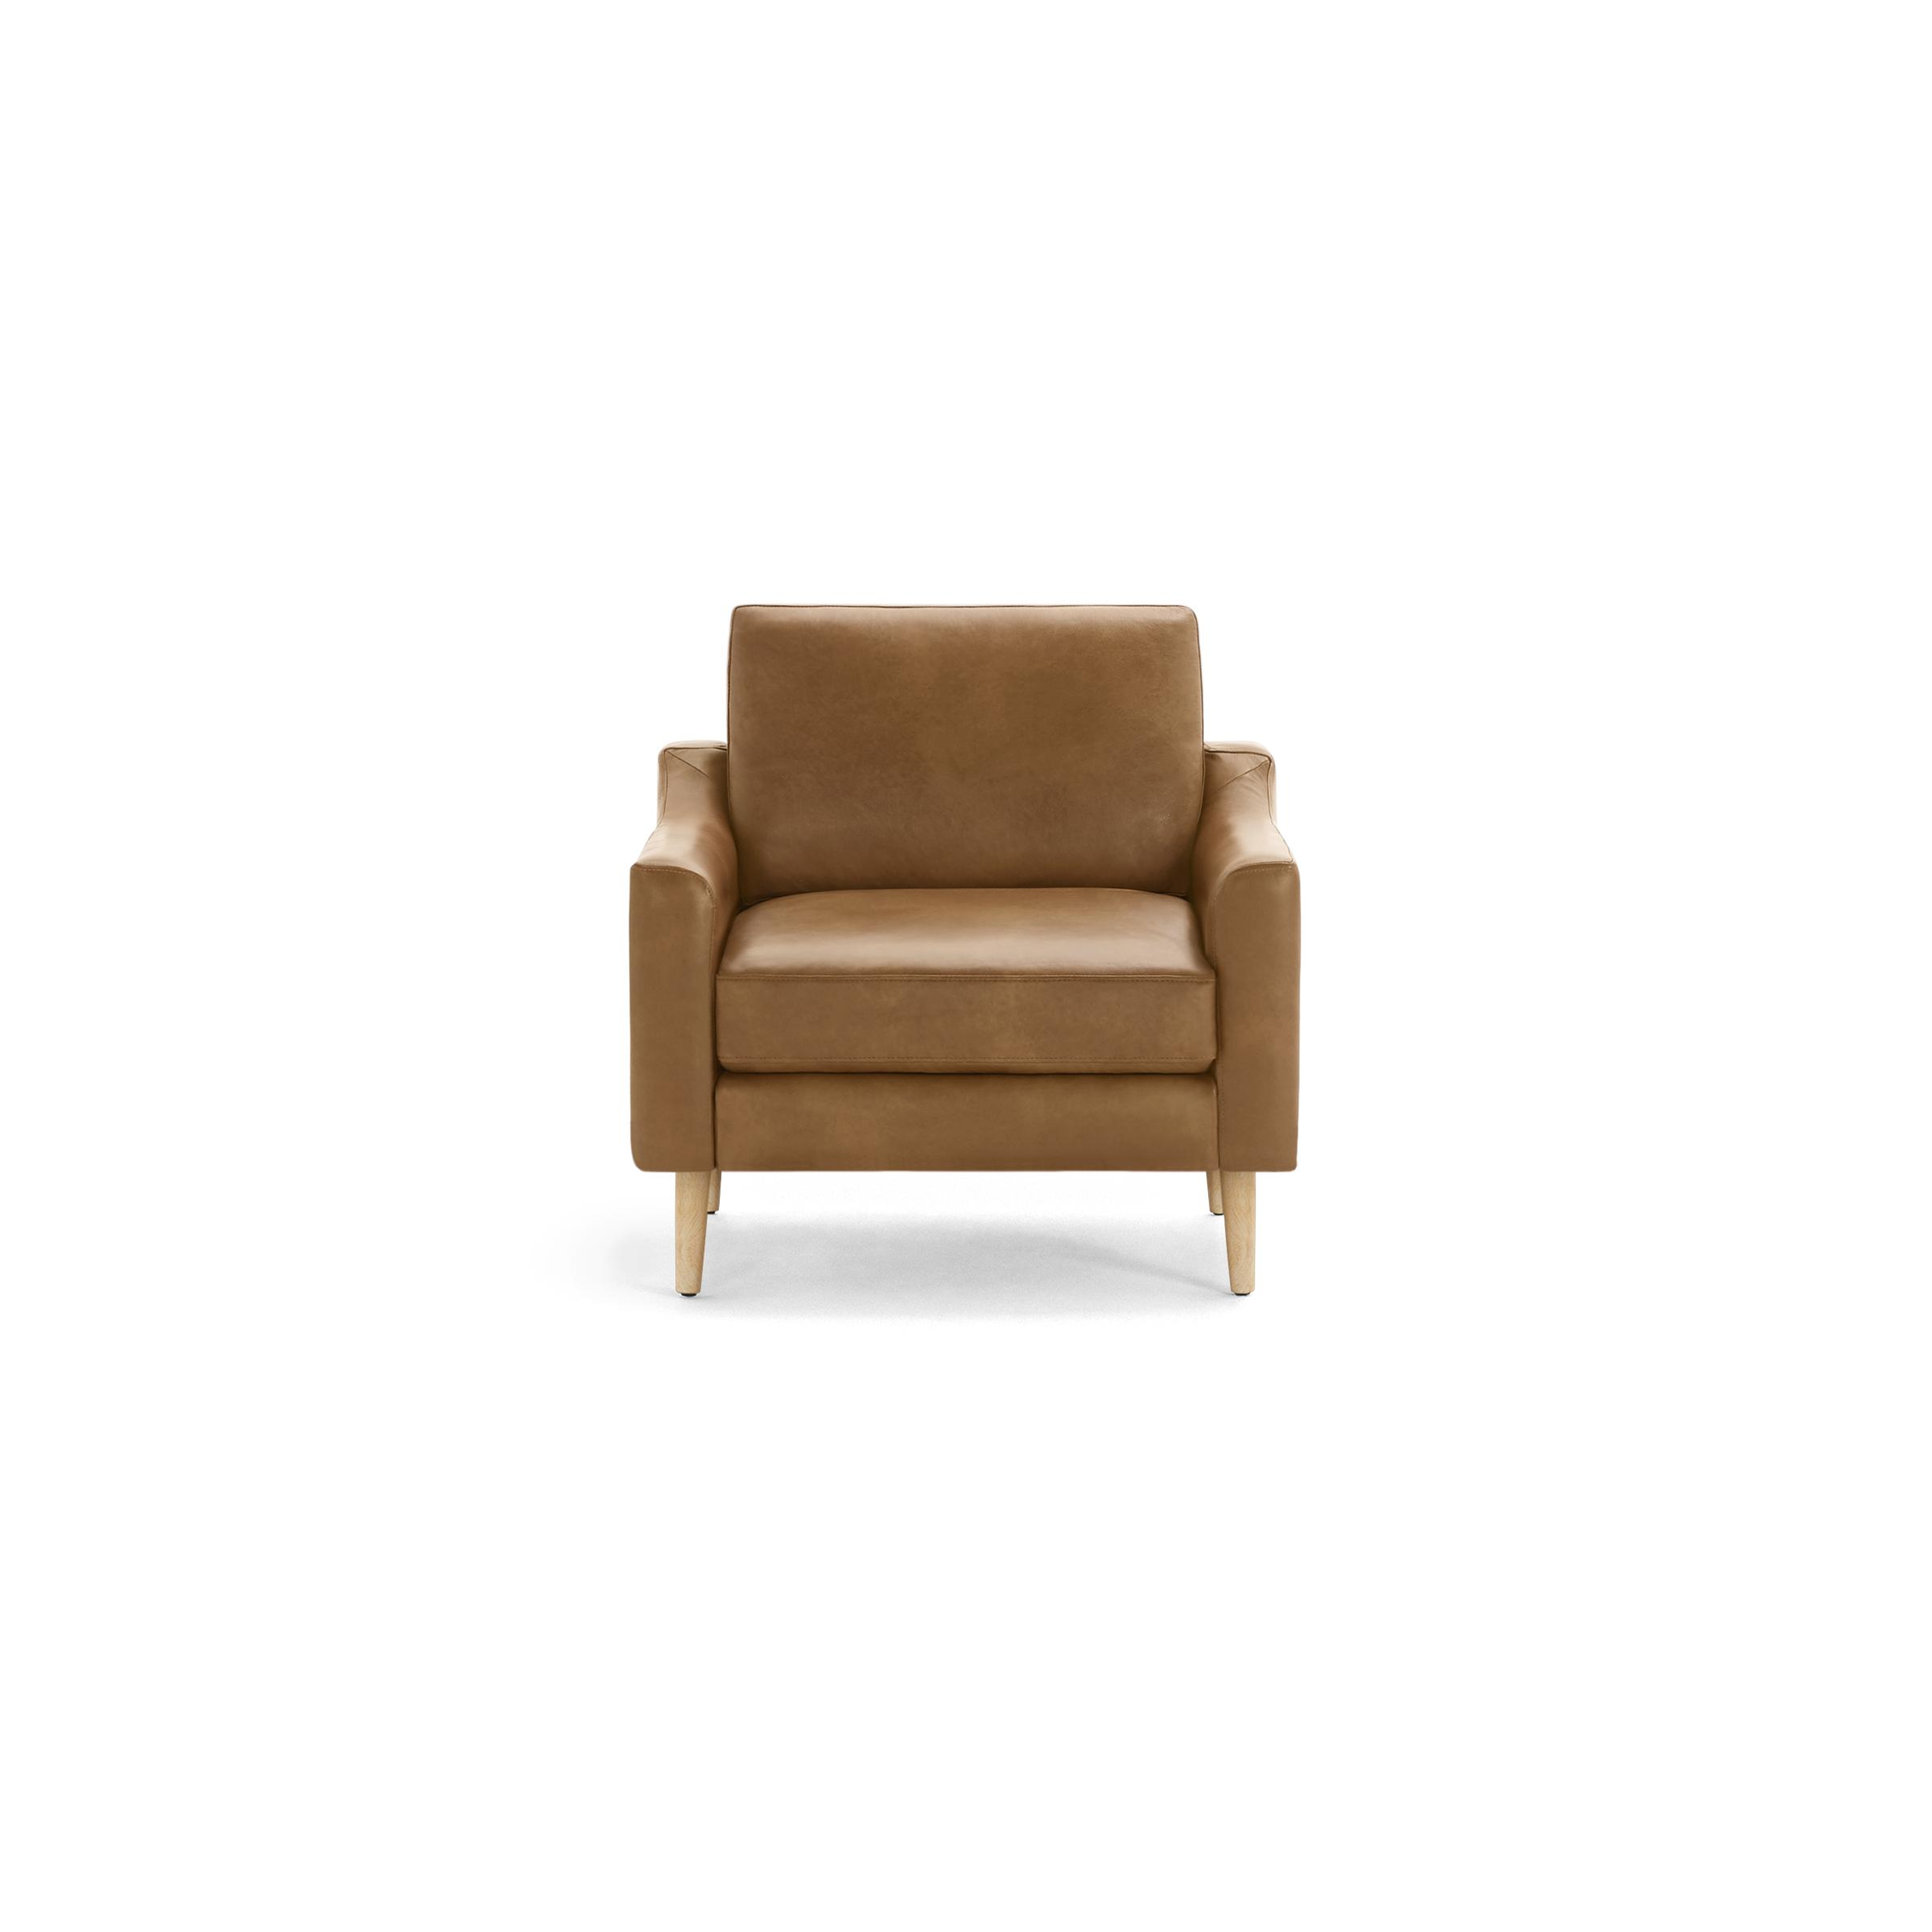 Nomad Leather Club Chair in Camel, Oak Legs, Leg Finish: OakLegs - Burrow